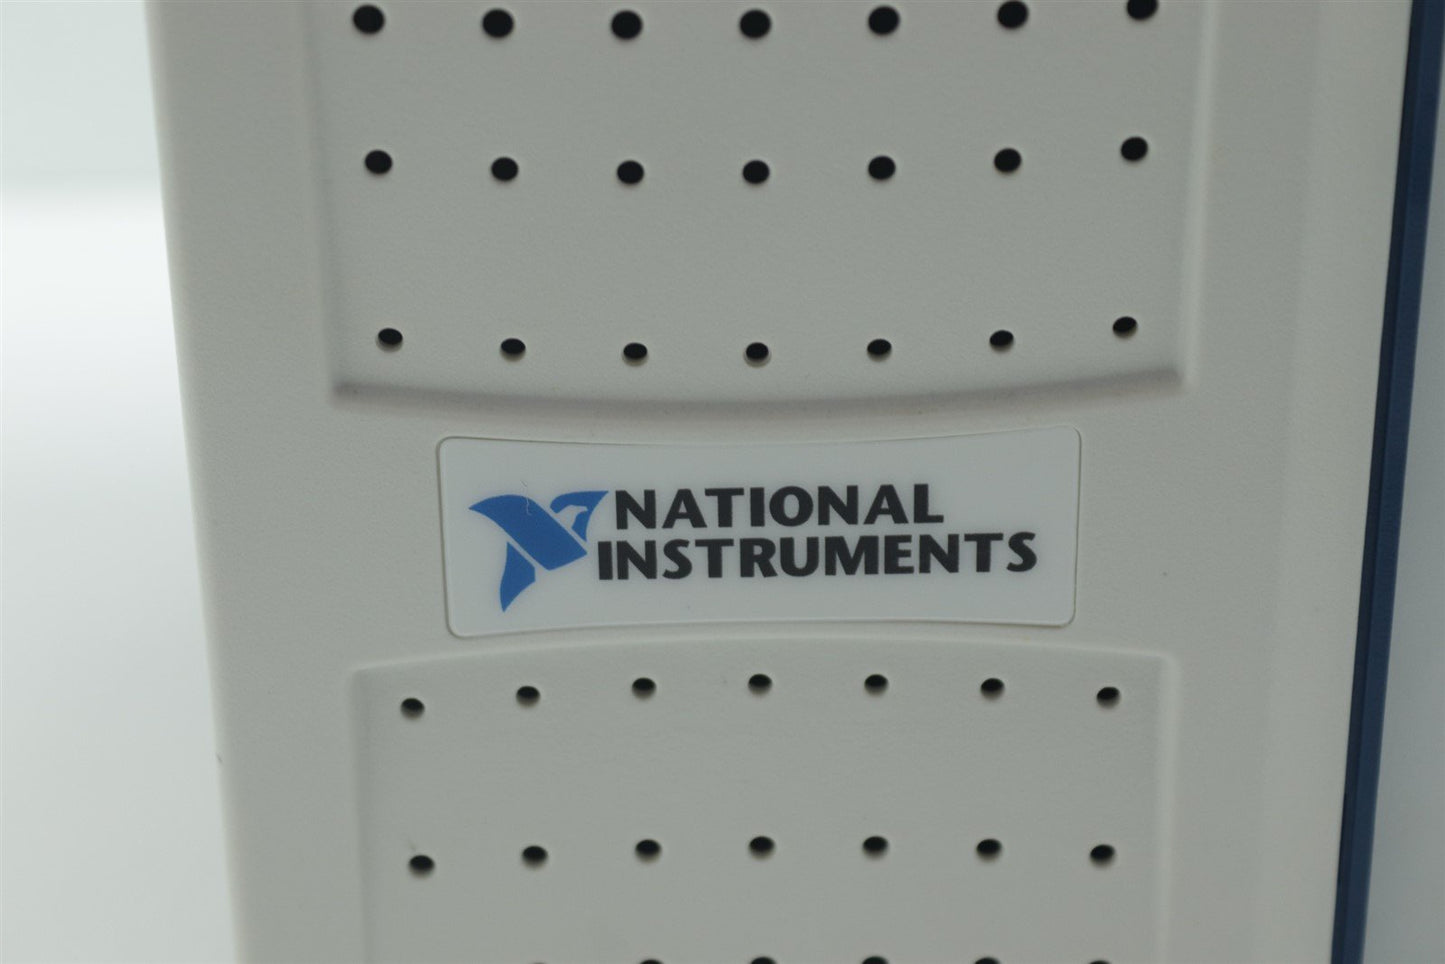 National Instruments NI PXI-1033 Mainframe 194918E-01L REV 3.8